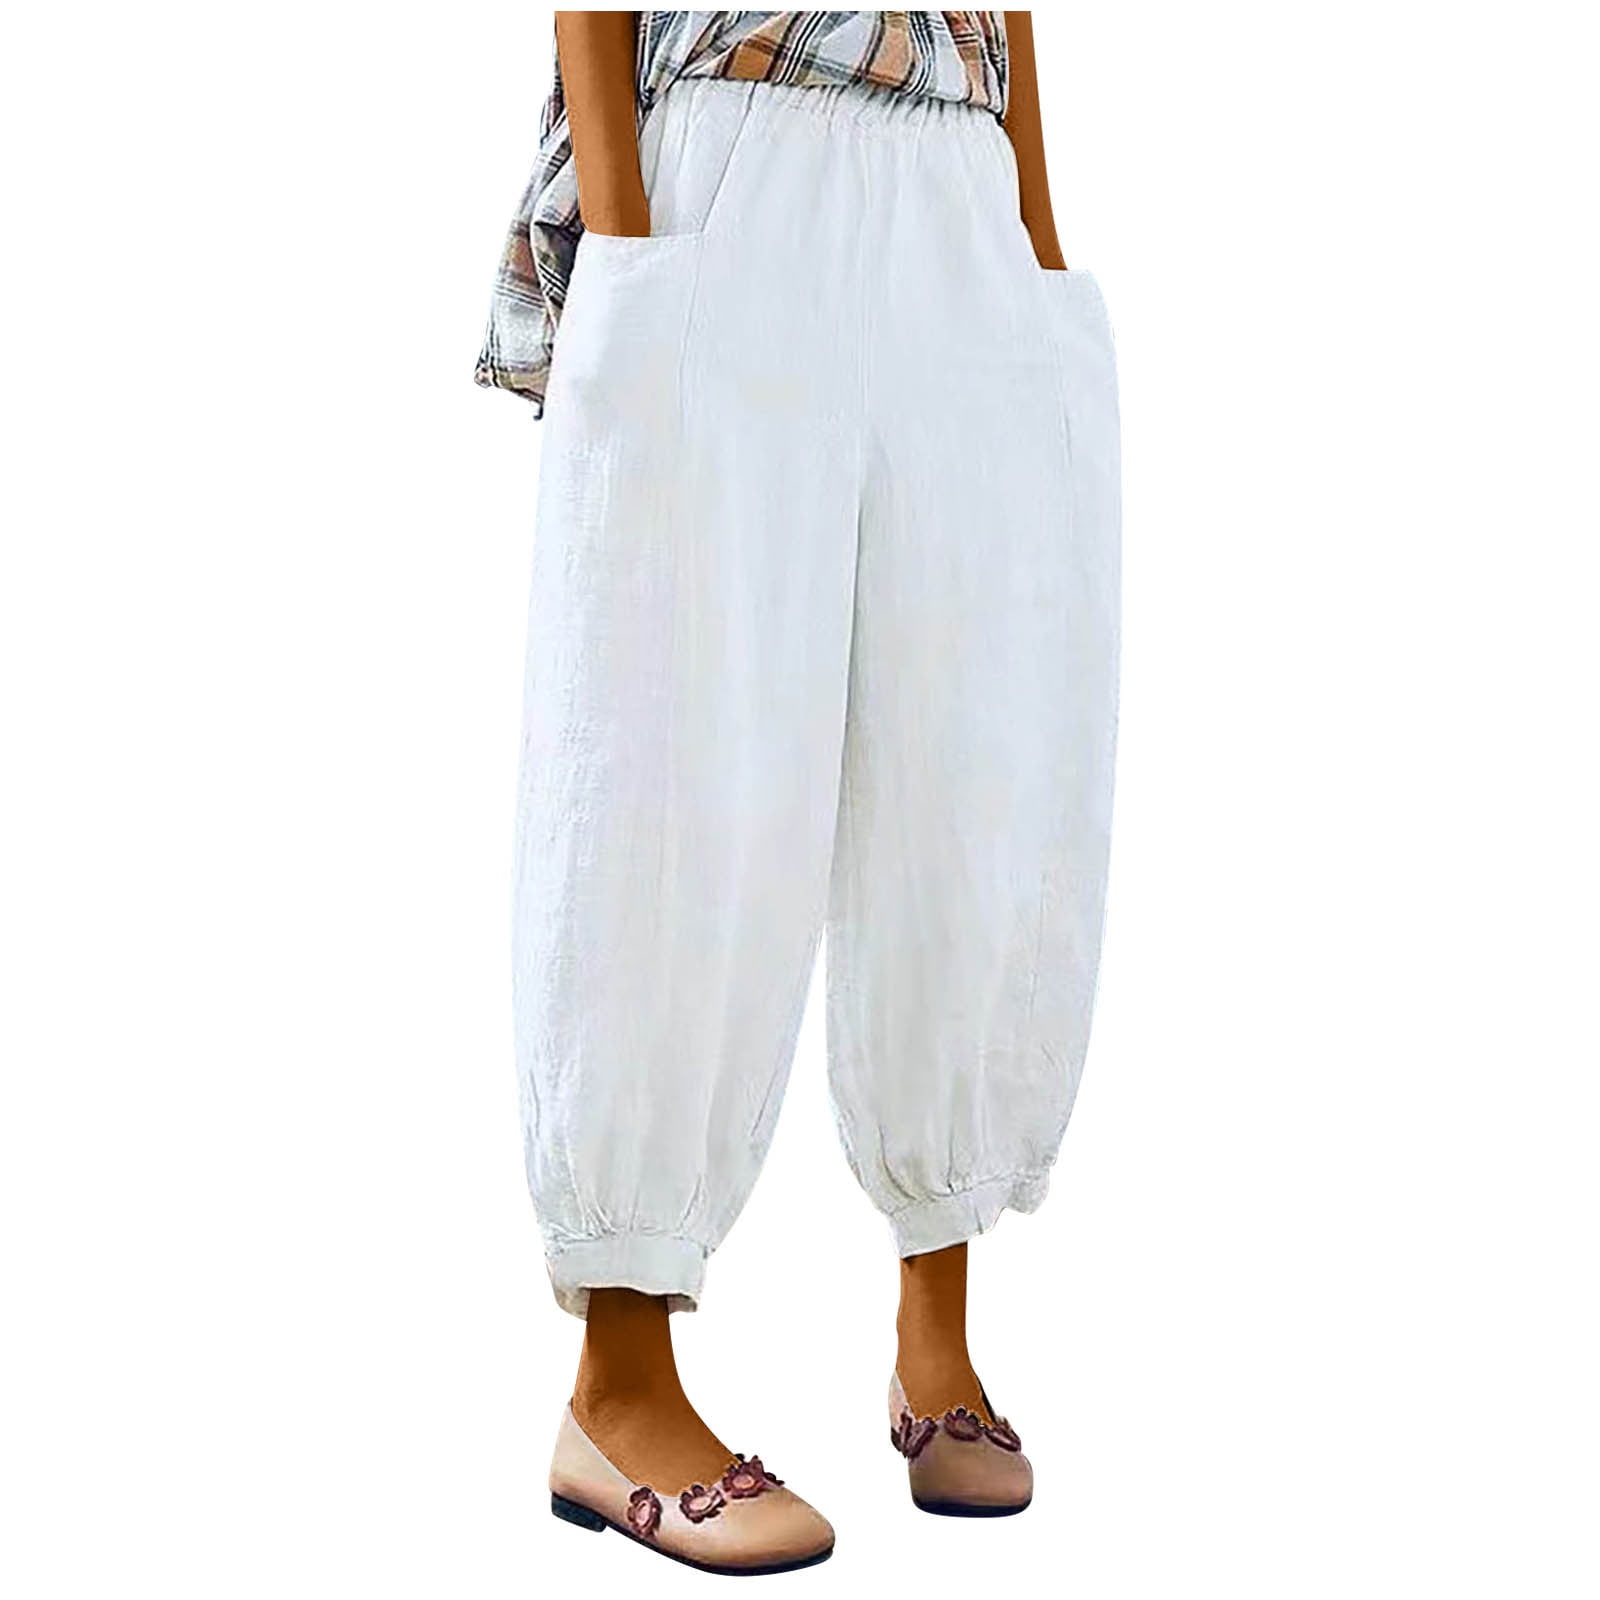 16 Jeans Plus Size Women Cotton Pants Summer Elastic Waist Loose Casual  White hot pants @ Best Price Online